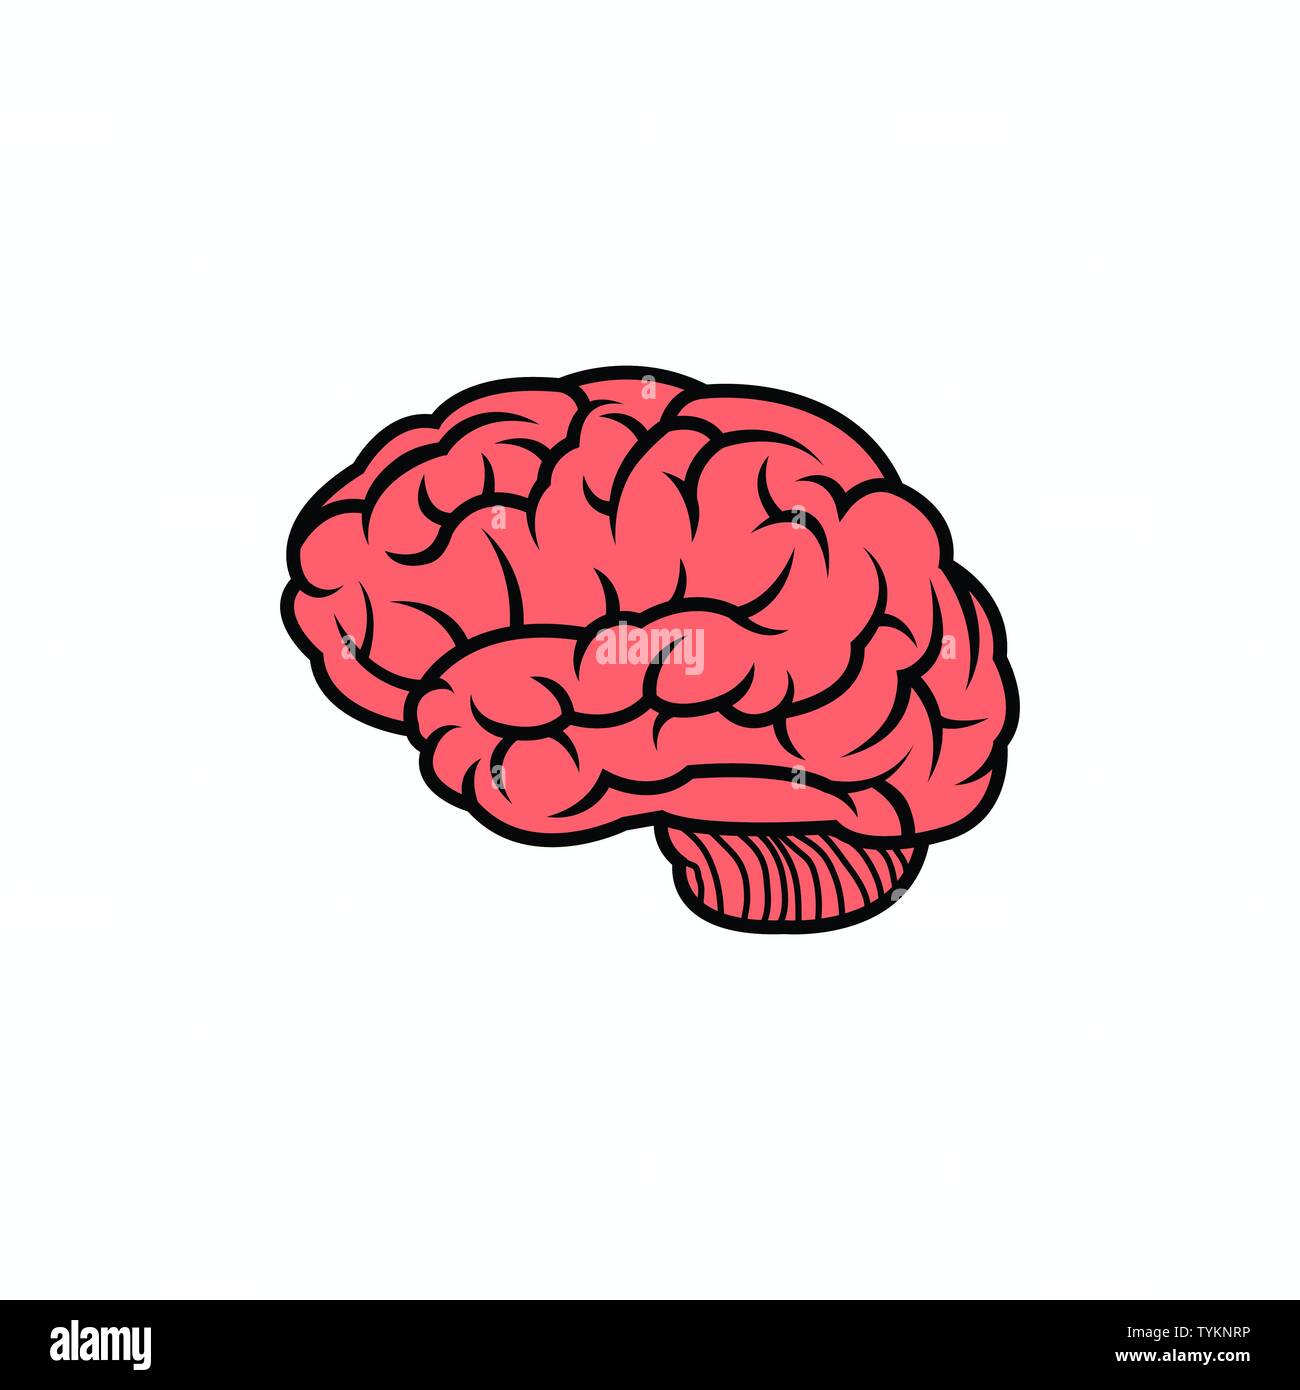 Brain logo design Stock Vector Images - Alamy